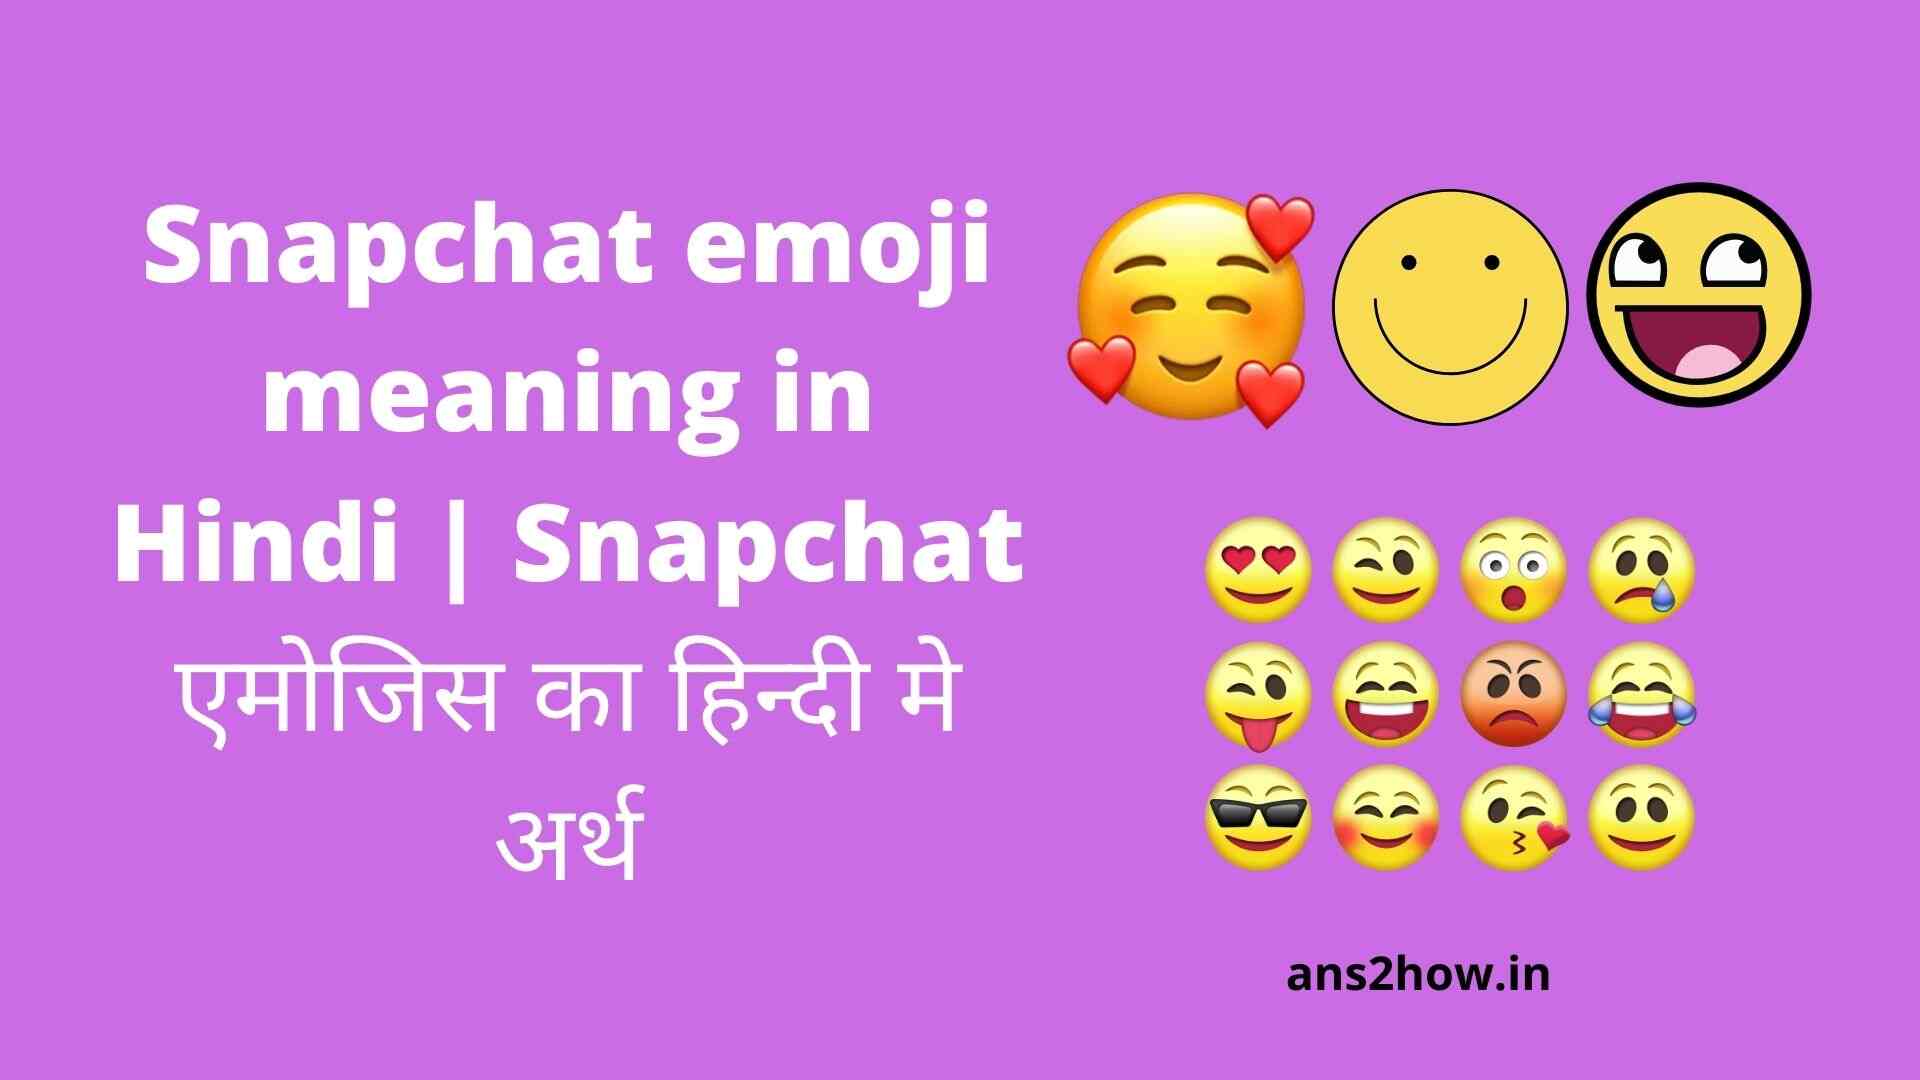 Snapchat emoji meaning in Hindi